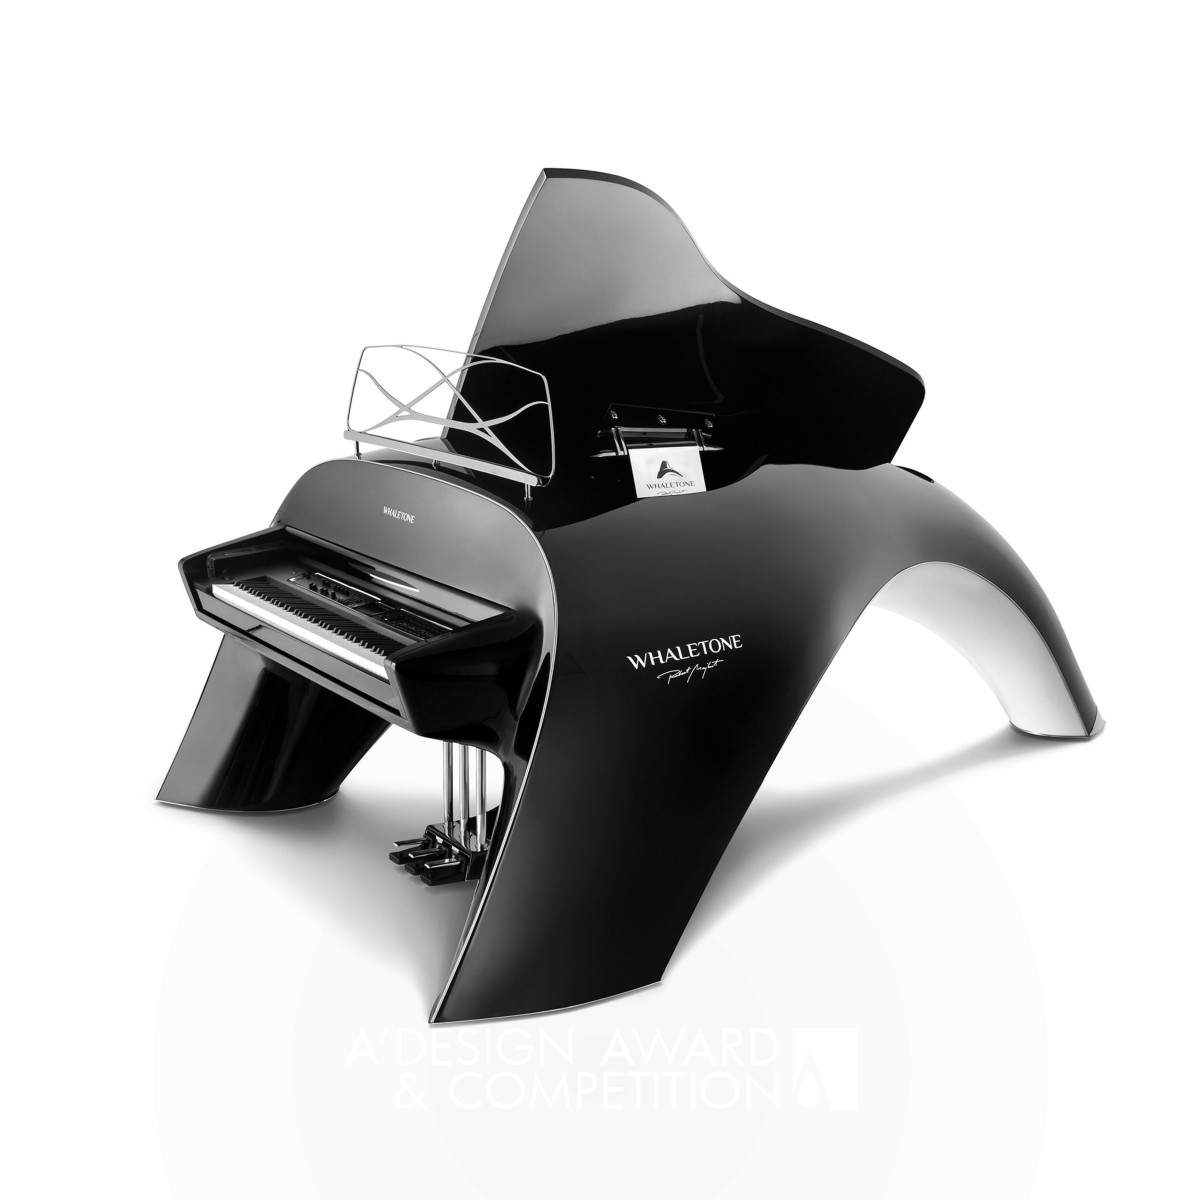 Whaletone Grand Hybrid Piano Musical Instrument by Robert Majkut Golden Musical Instruments Design Award Winner 2023 